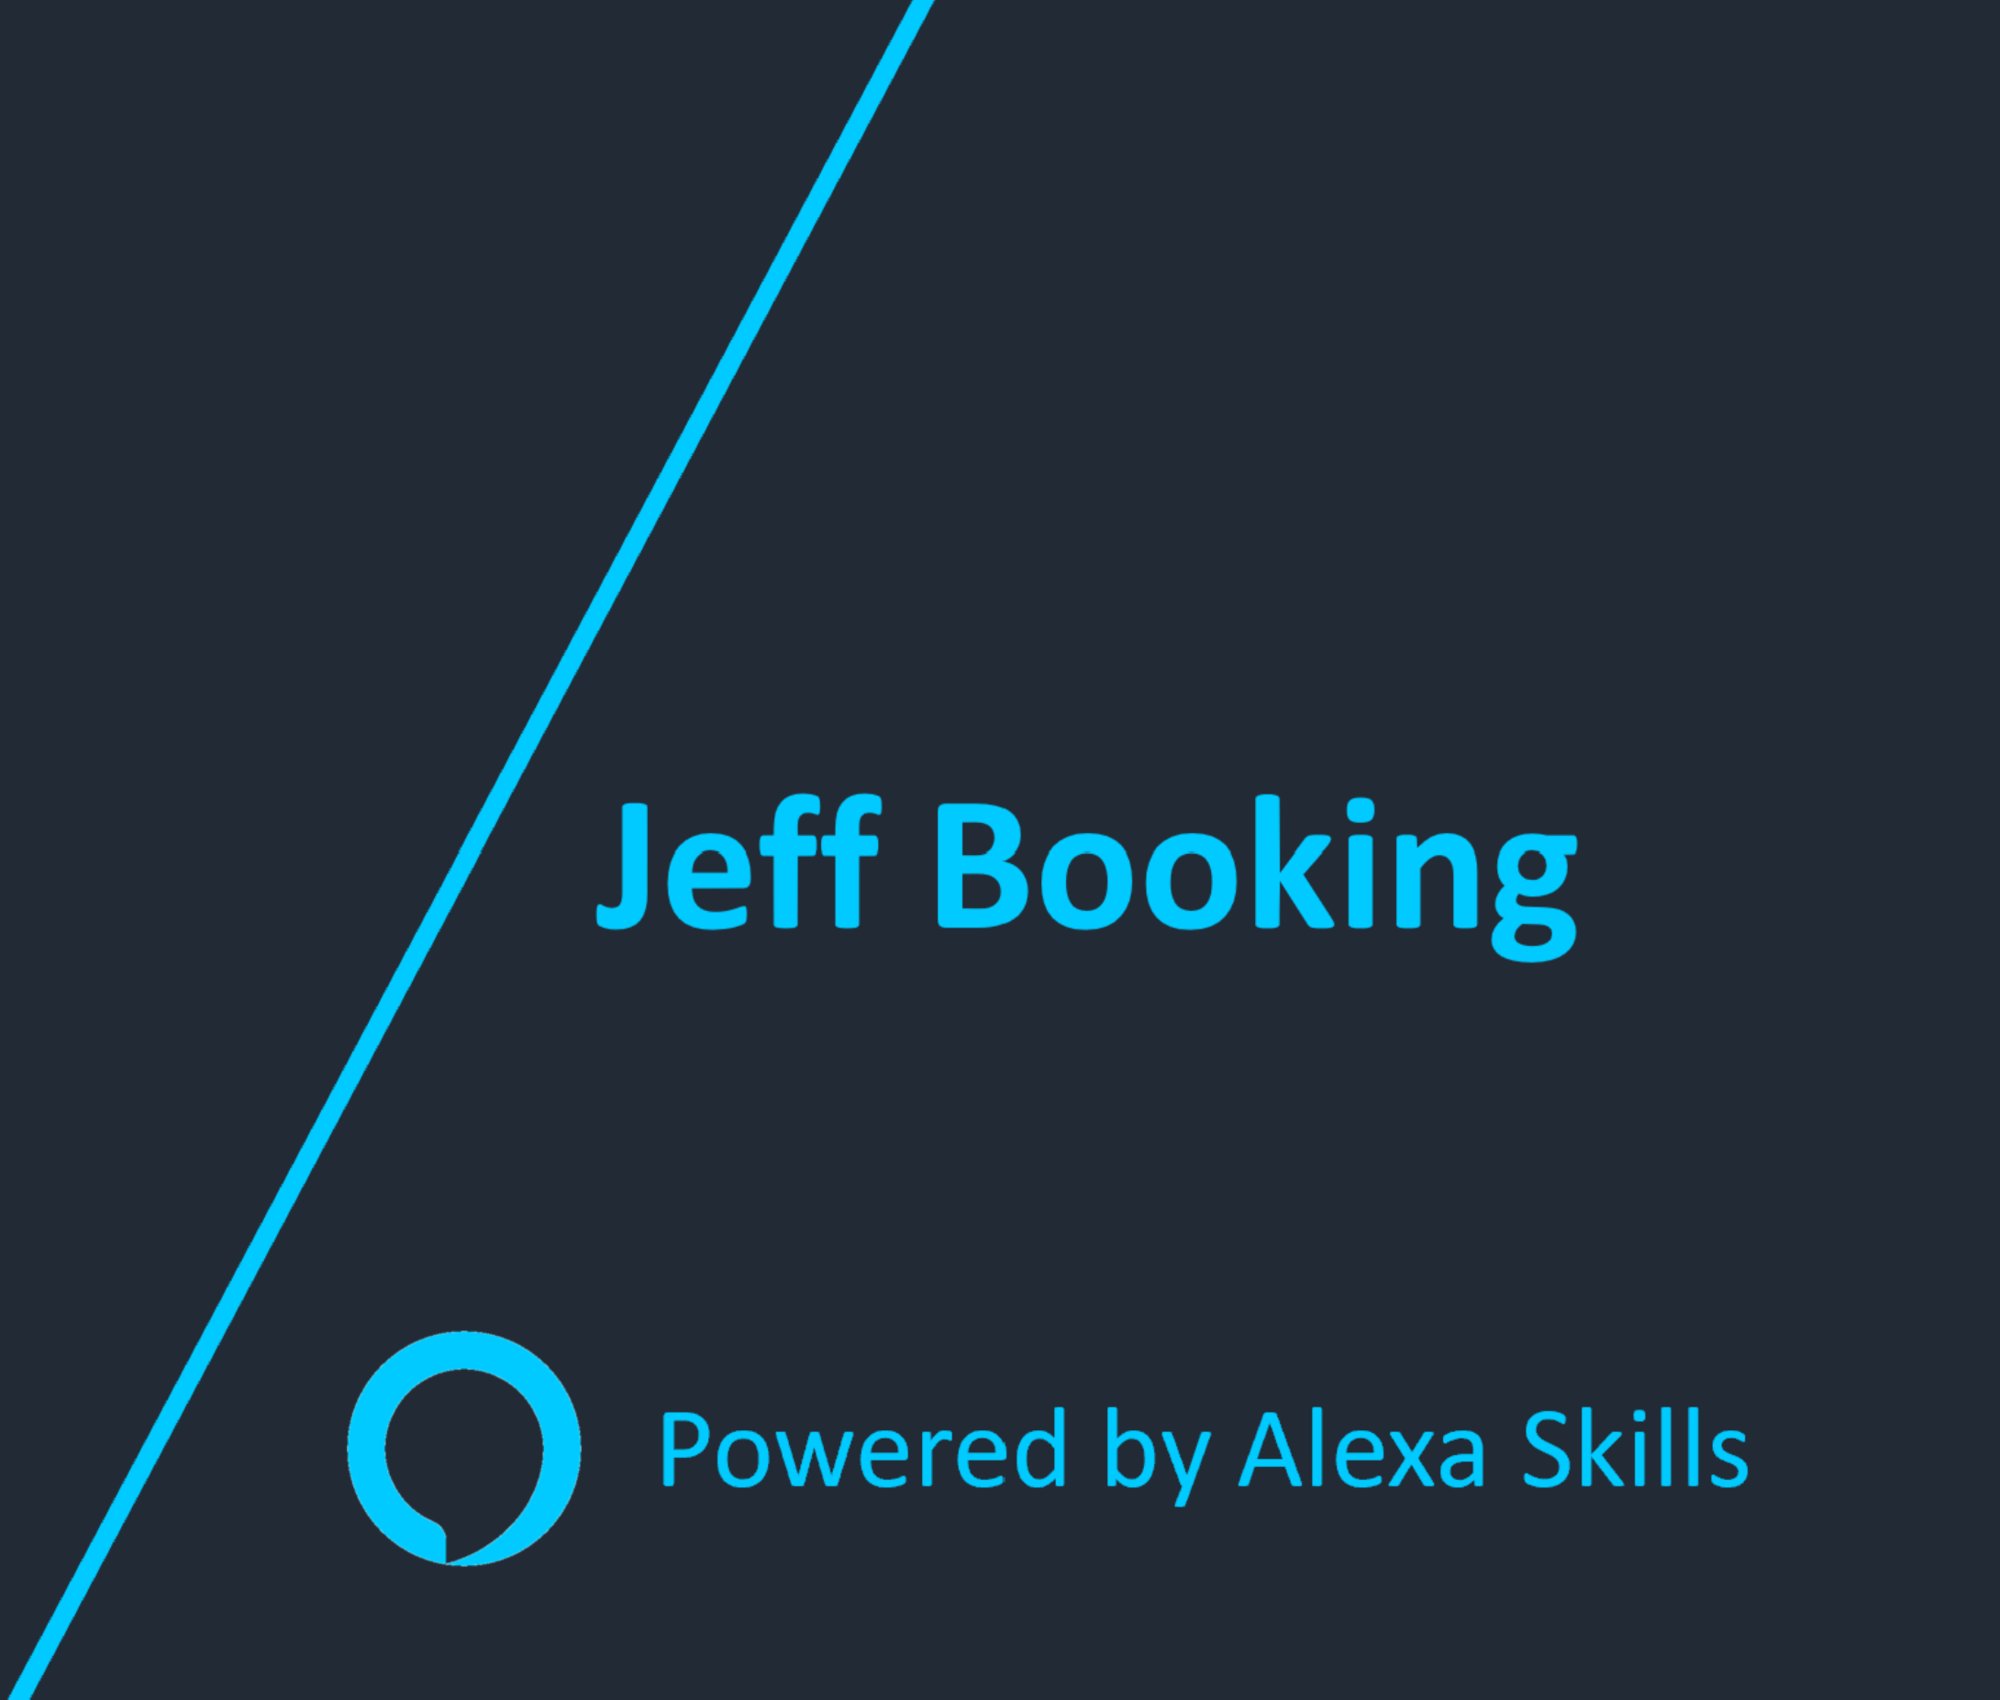 Jeff Booking